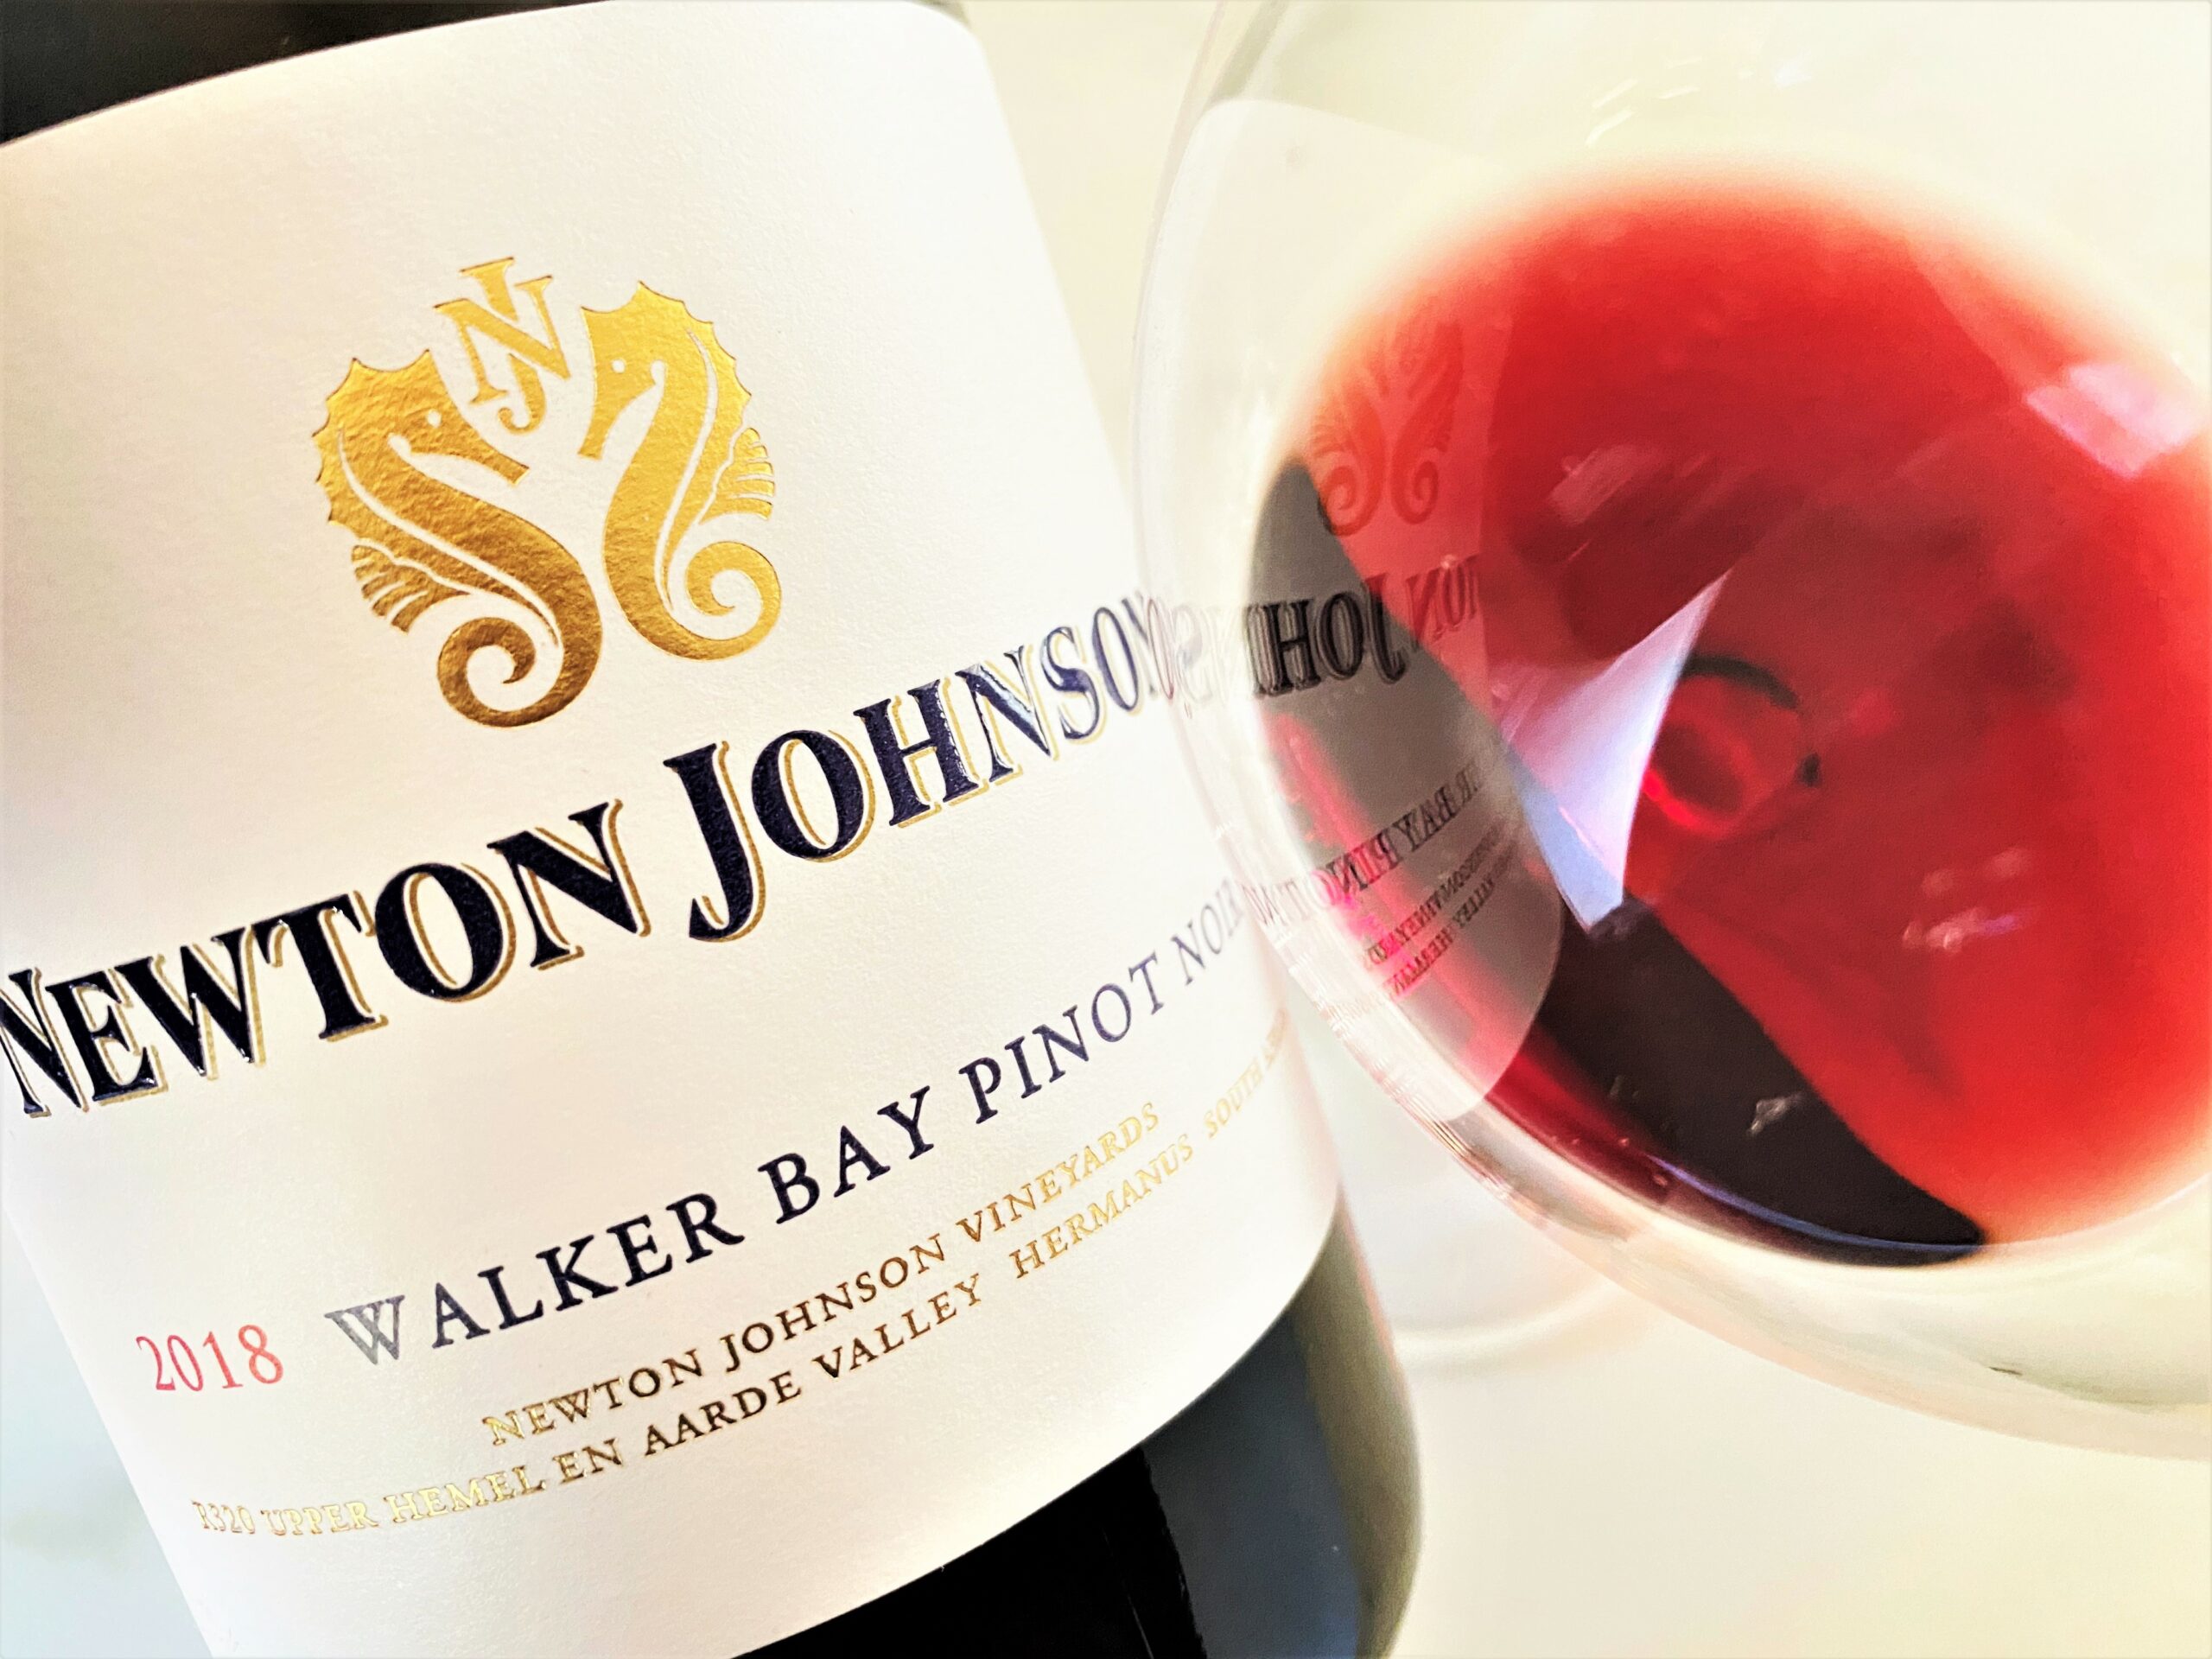 Newton Johnson Walker Bay Pinot Noir 2021